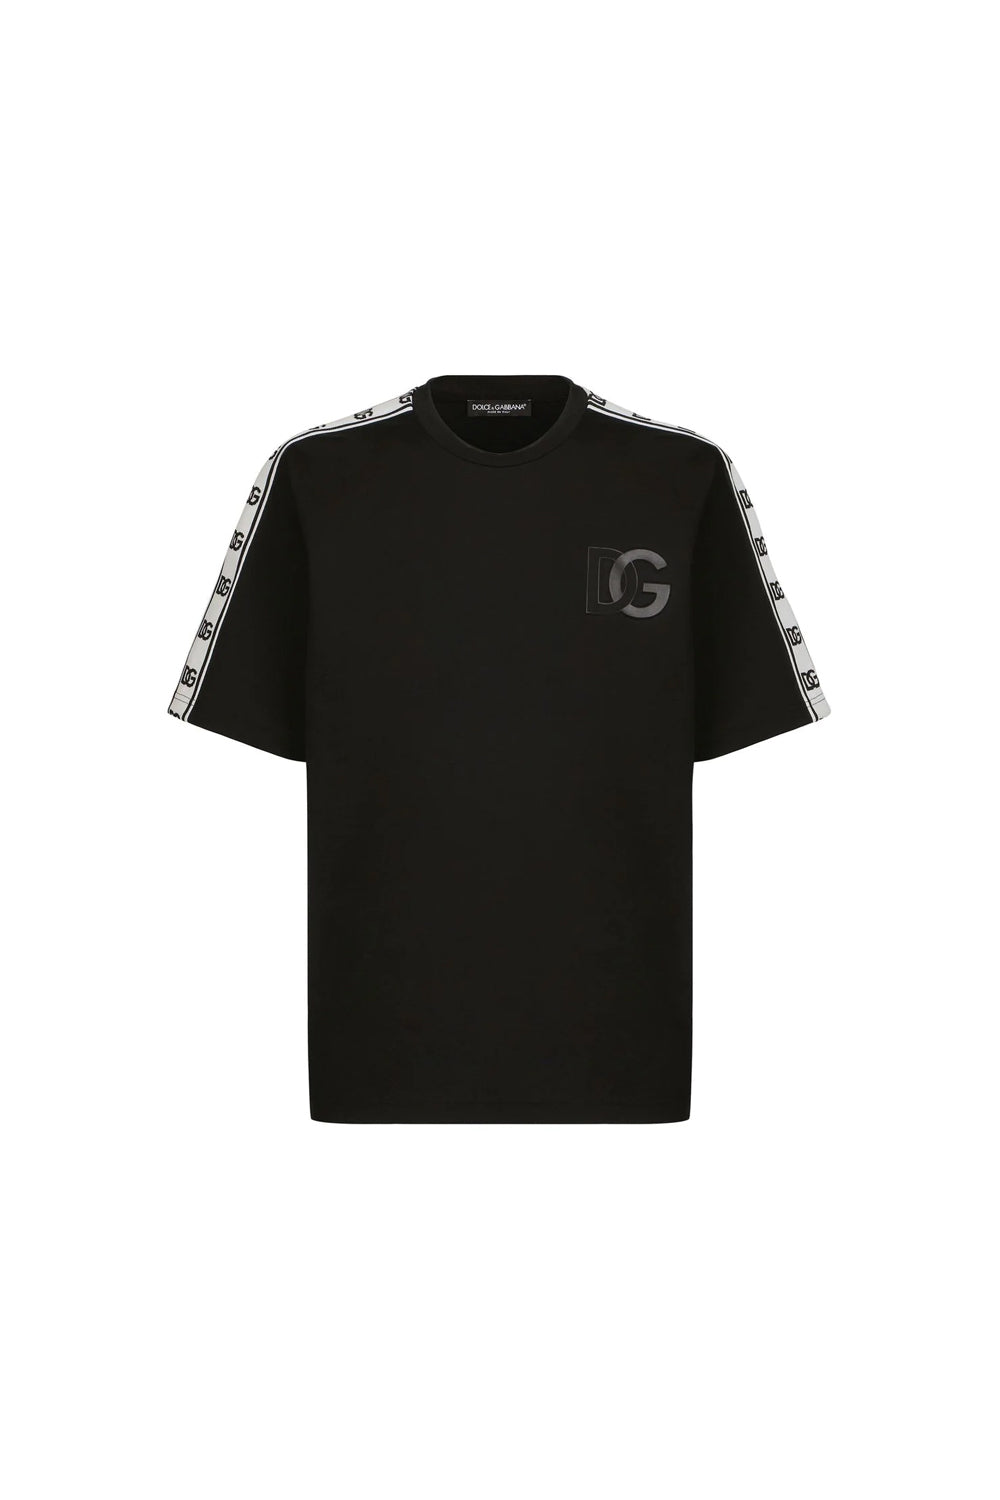 Dolce & Gabbana logo-tape technical jersey T-shirt